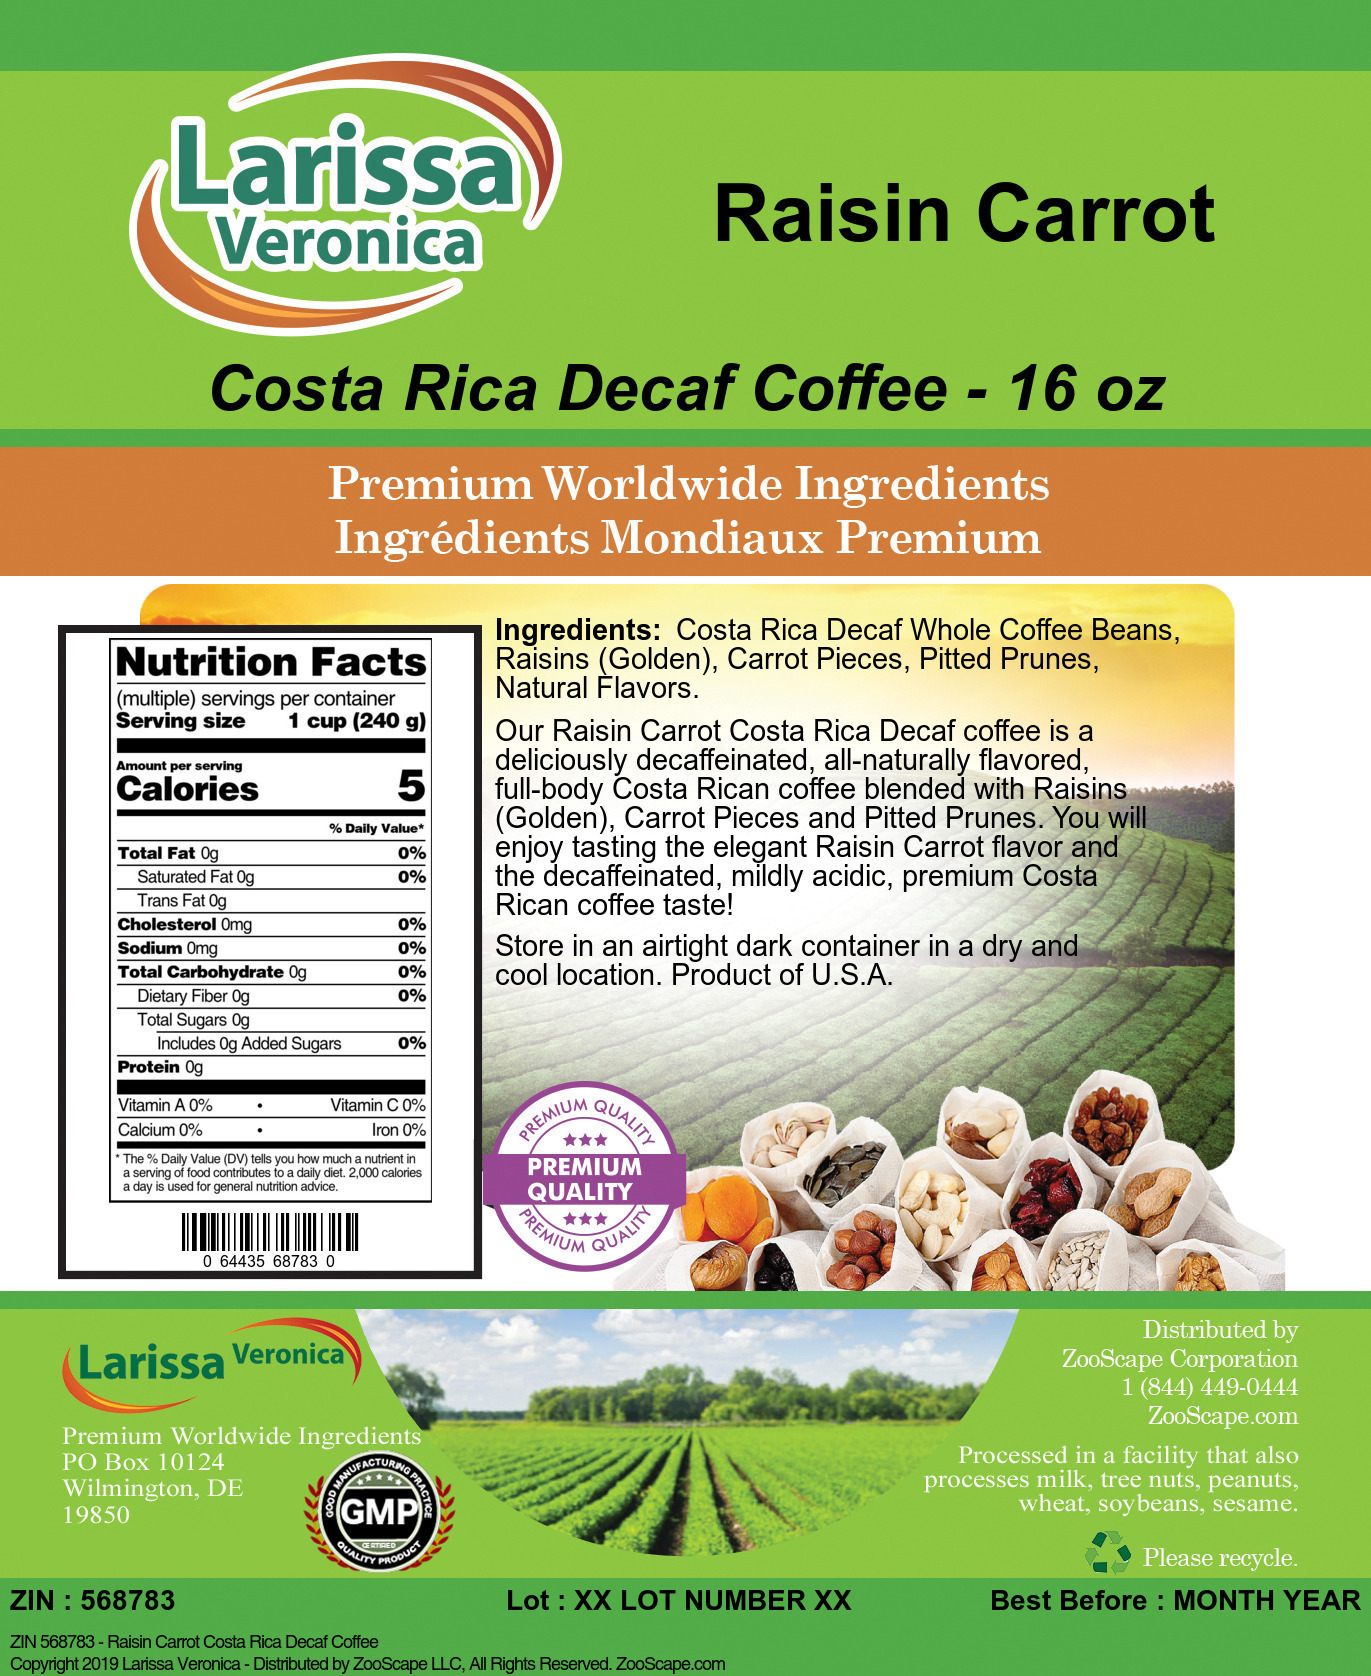 Raisin Carrot Costa Rica Decaf Coffee - Label